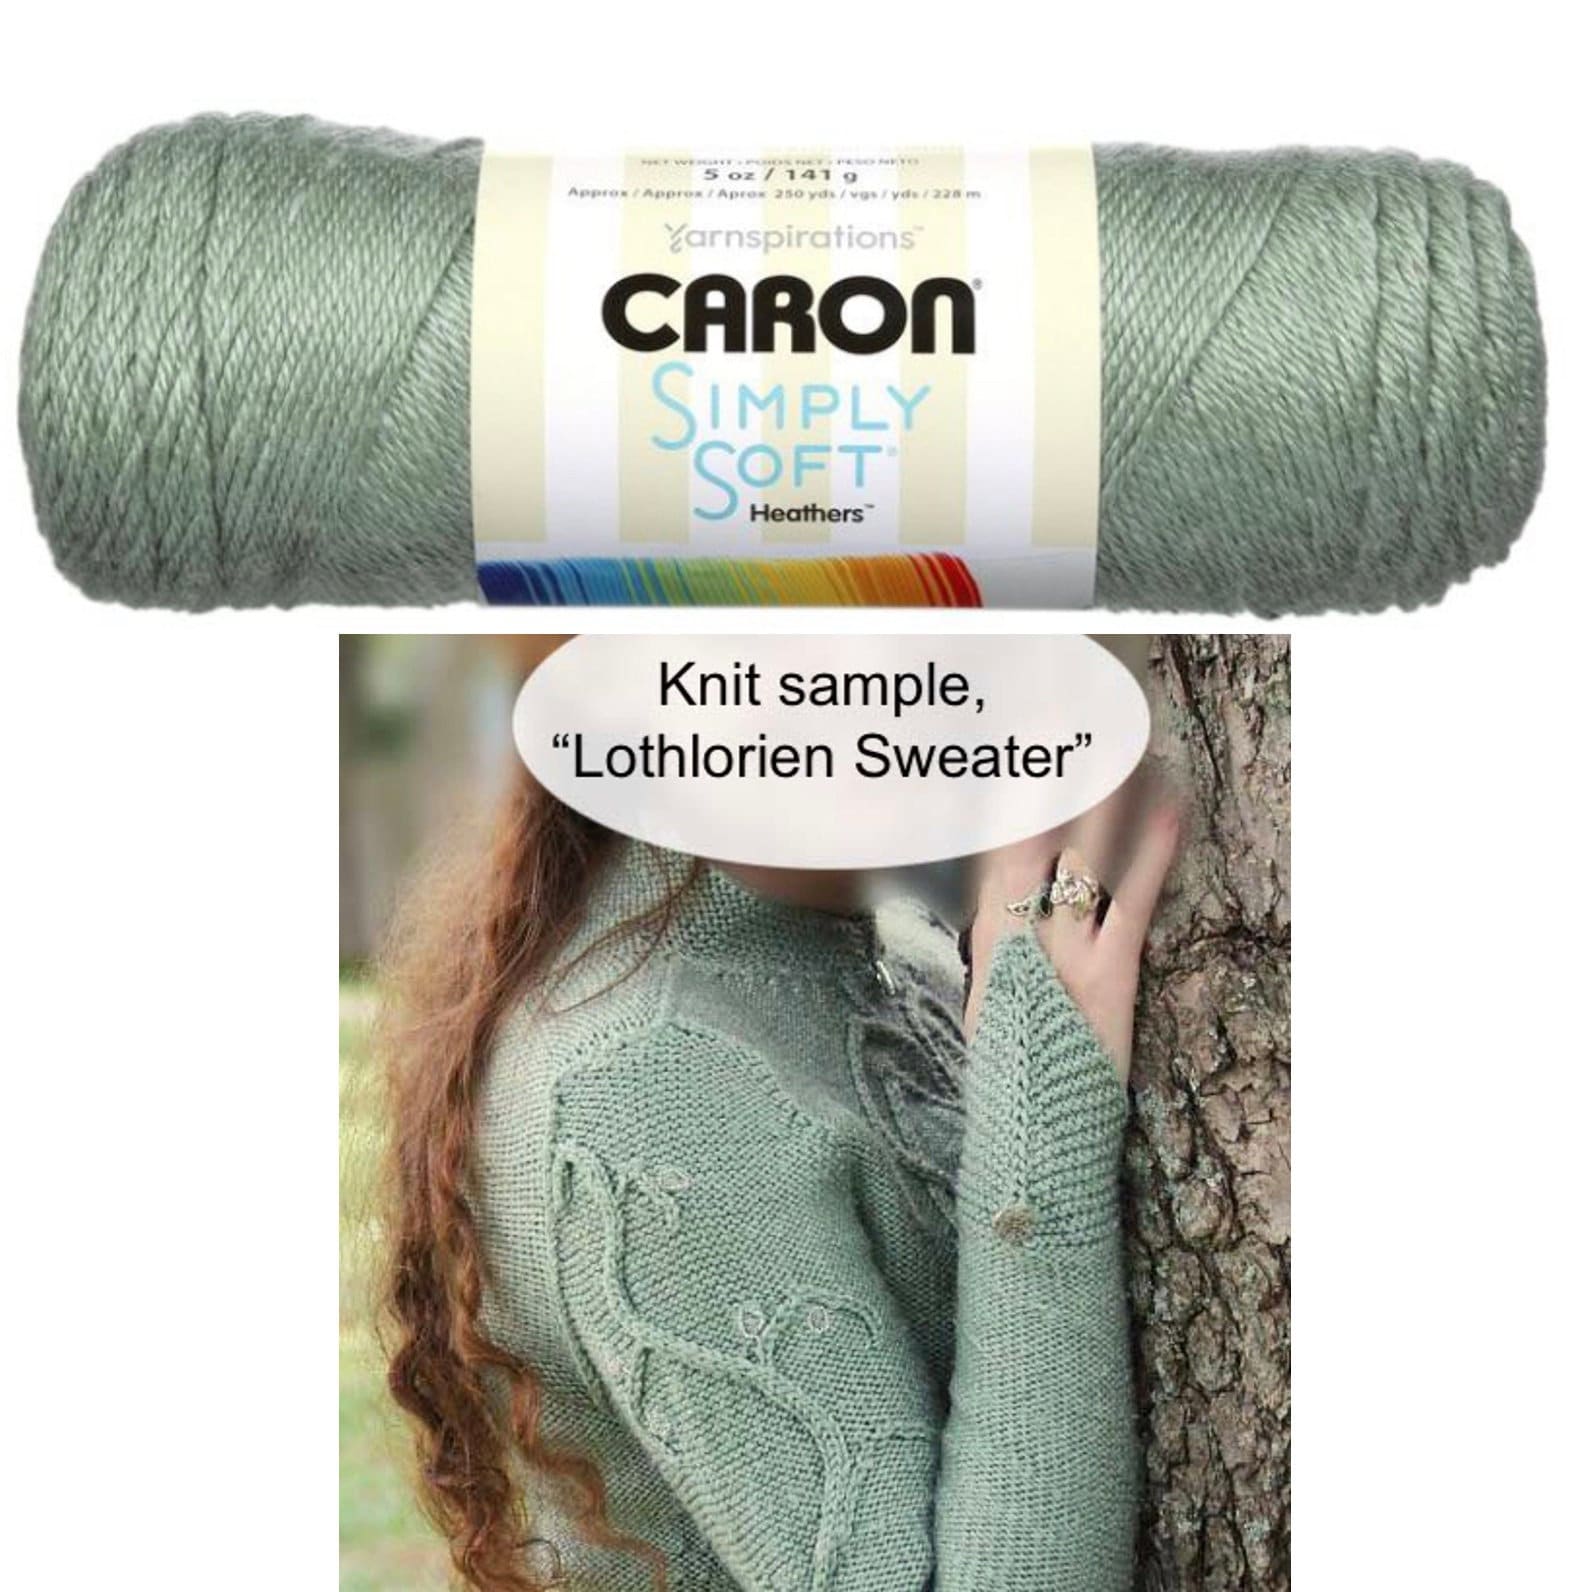 Caron Simply Soft Woodland Heather Yarn - 3 Pack Of 141g/5oz